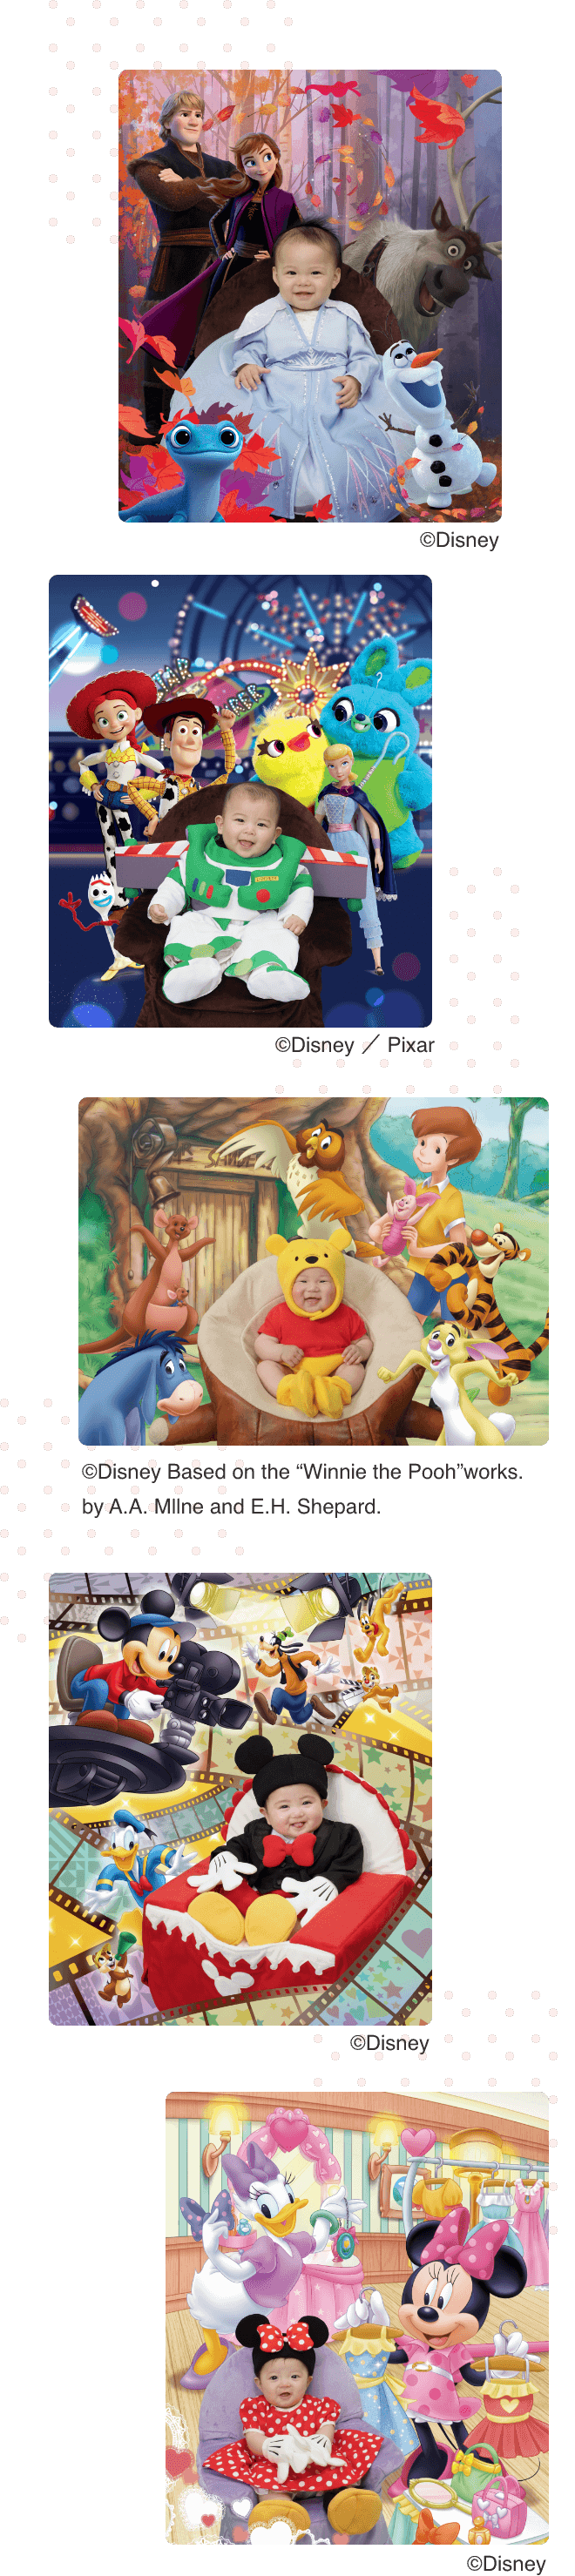 ©Disney ©Disney Based on the “Winnie the Pooh”works. by A.A. Mllne and E.H. Shepard. ©Disney ／ Pixar ©Disney ©Disney